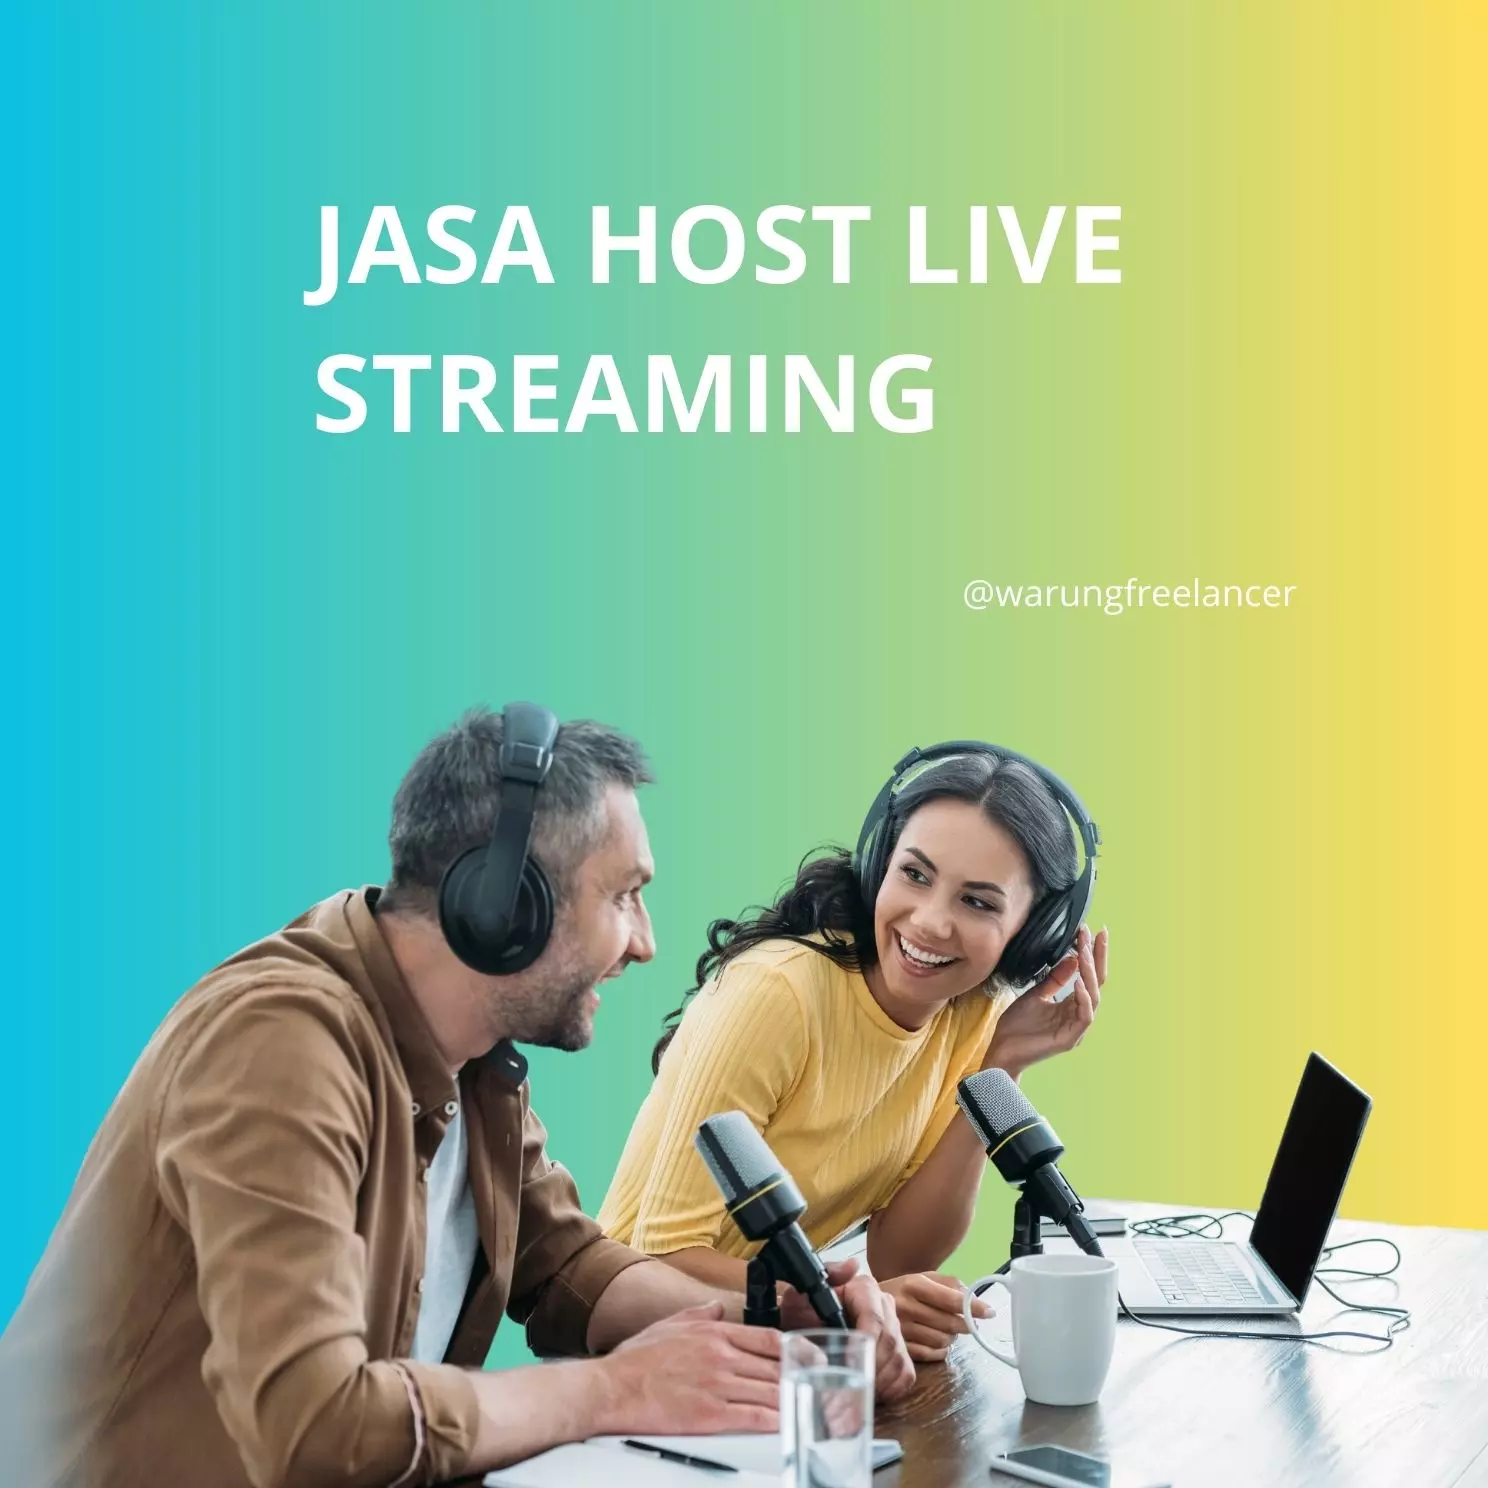 Jasa Host Live Streaming